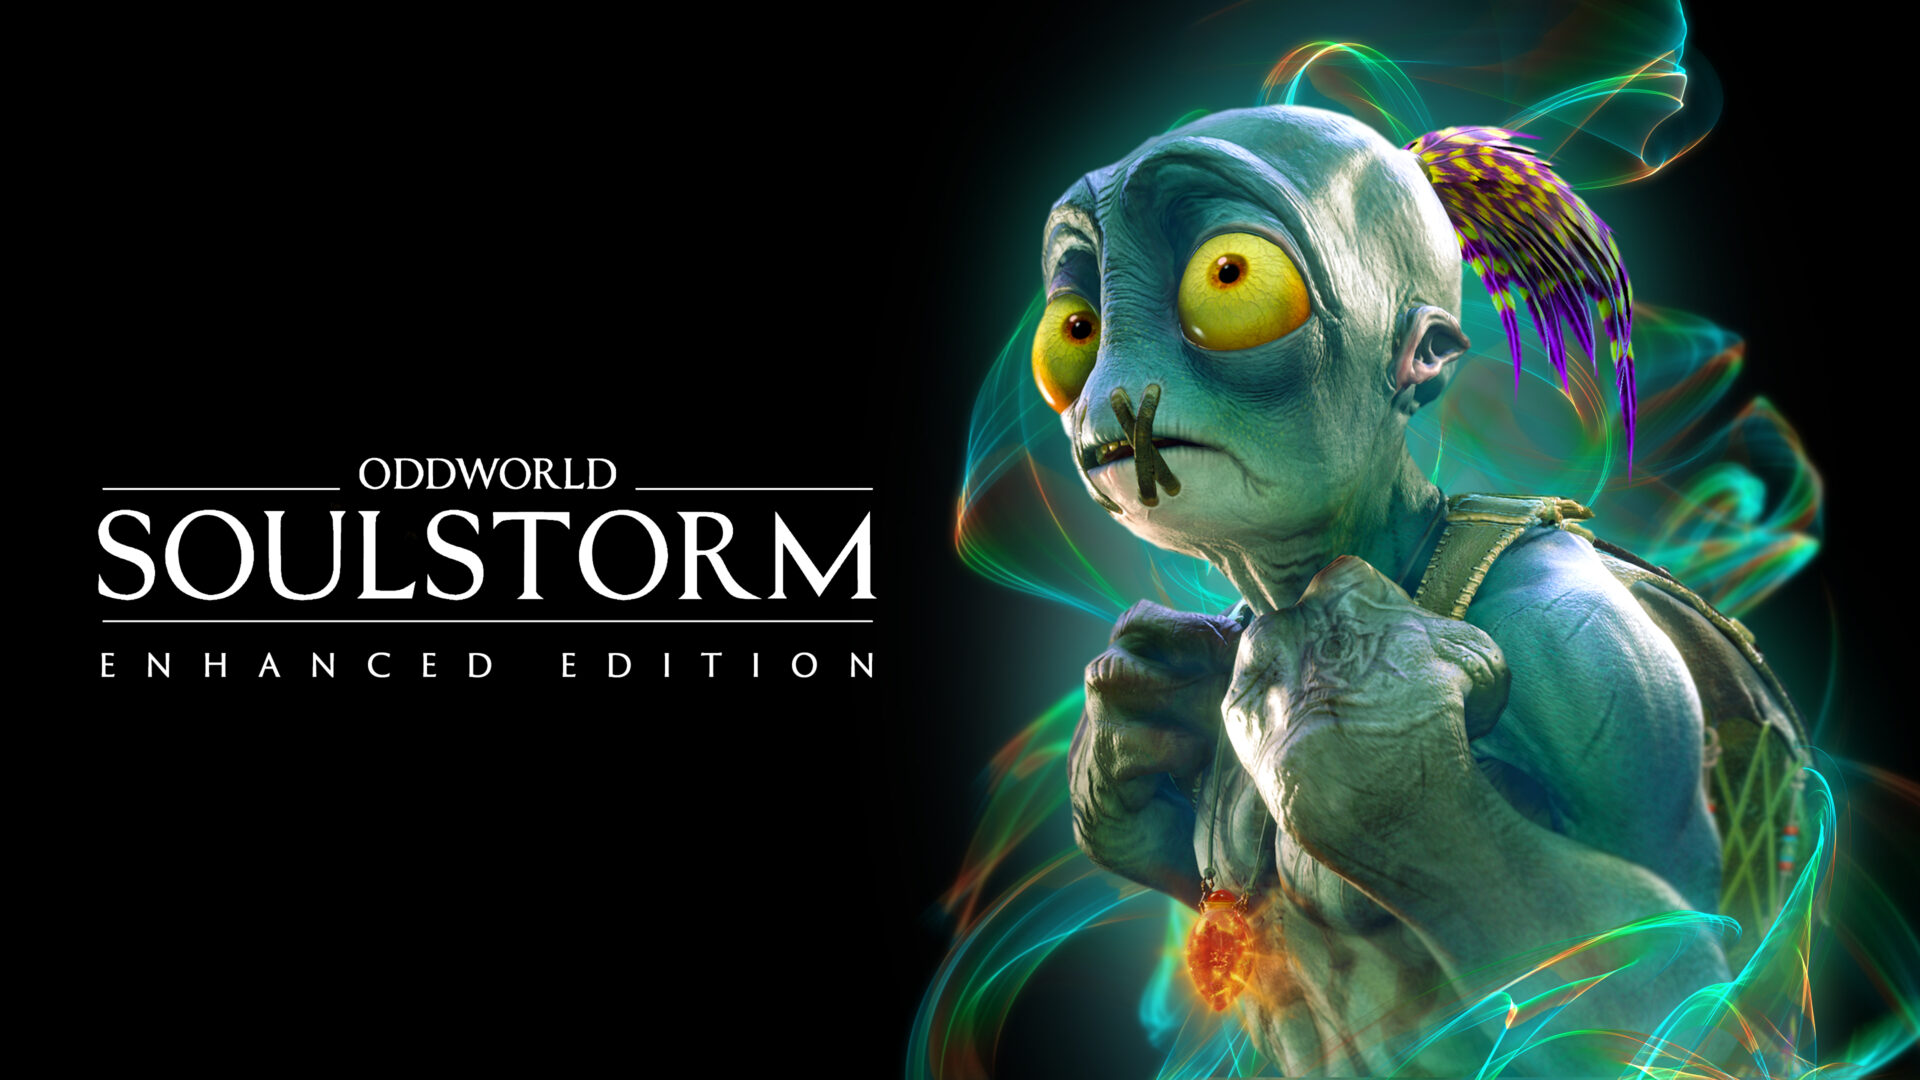 Oddworld: Soulstorm Enhanced Edition выходит на приставках Xbox в ноябре: с сайта NEWXBOXONE.RU